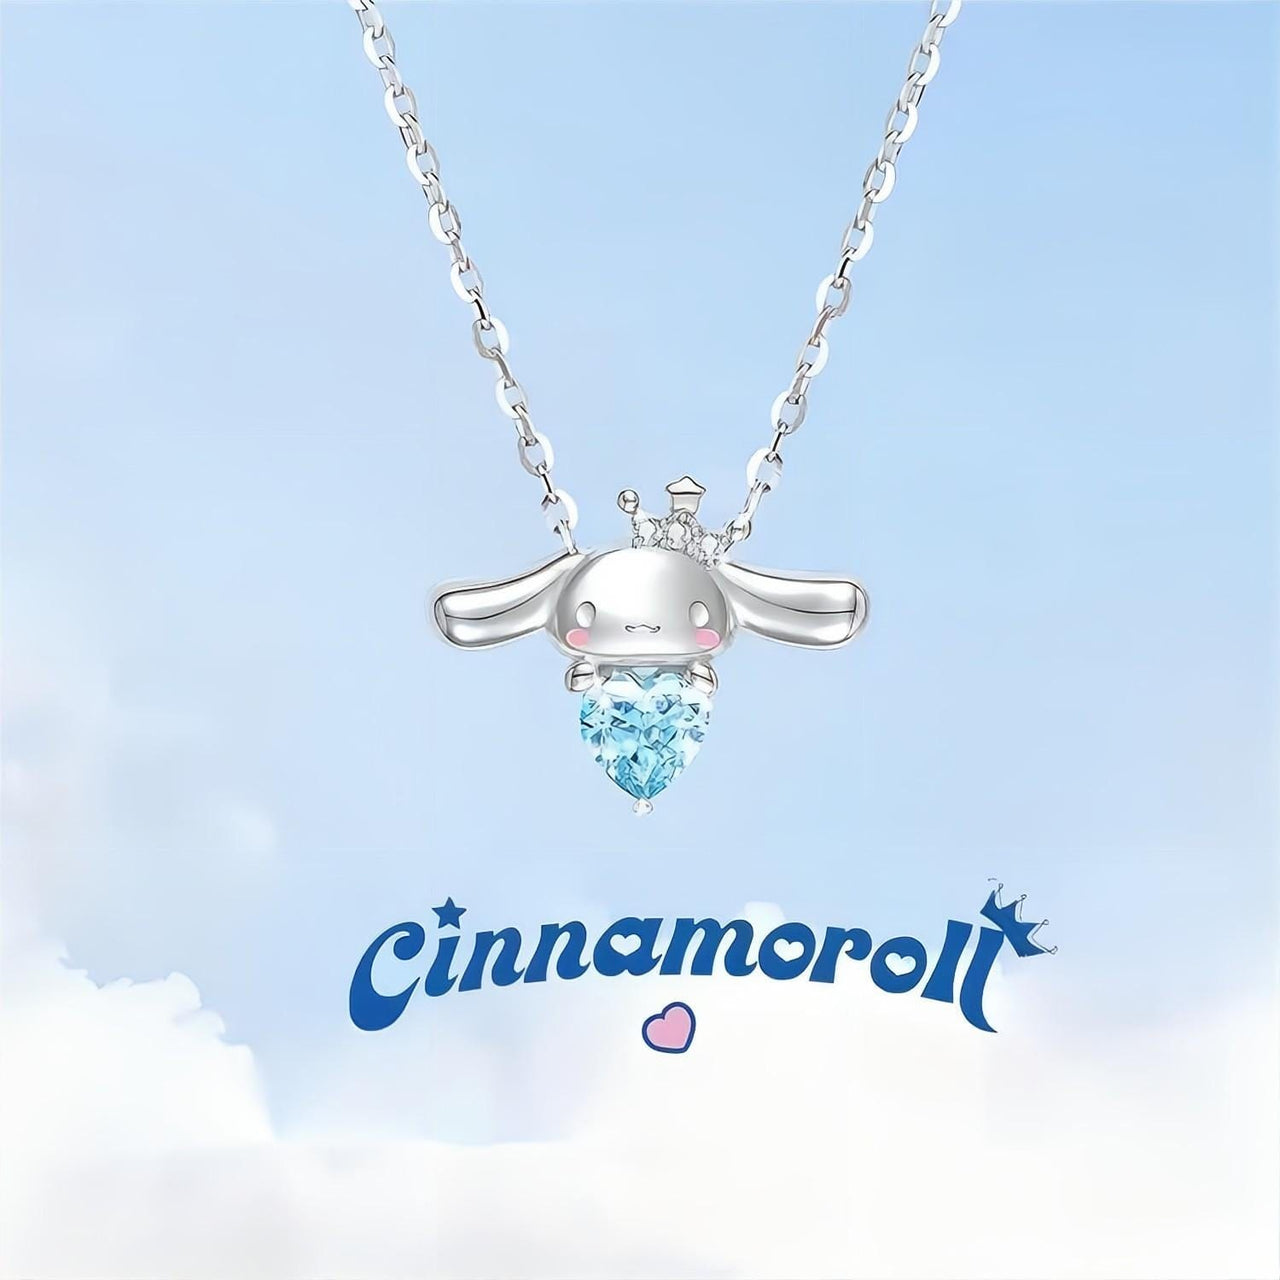 cinnamoroll necklace